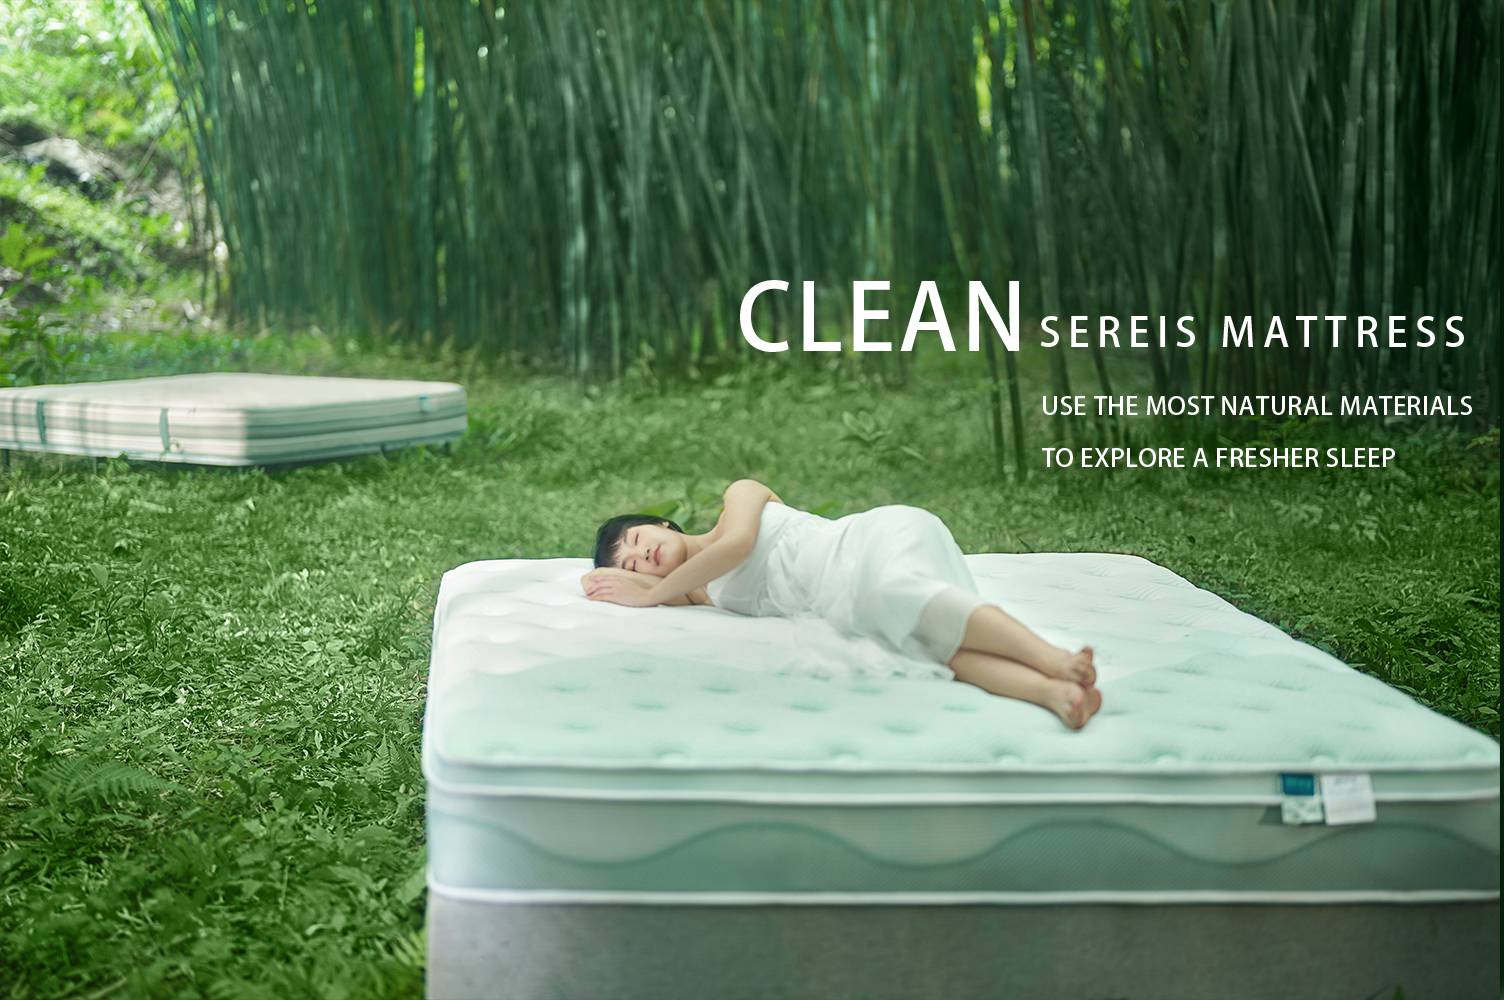 LINSY Clean Series Mattress, offer a fresh sleep experience